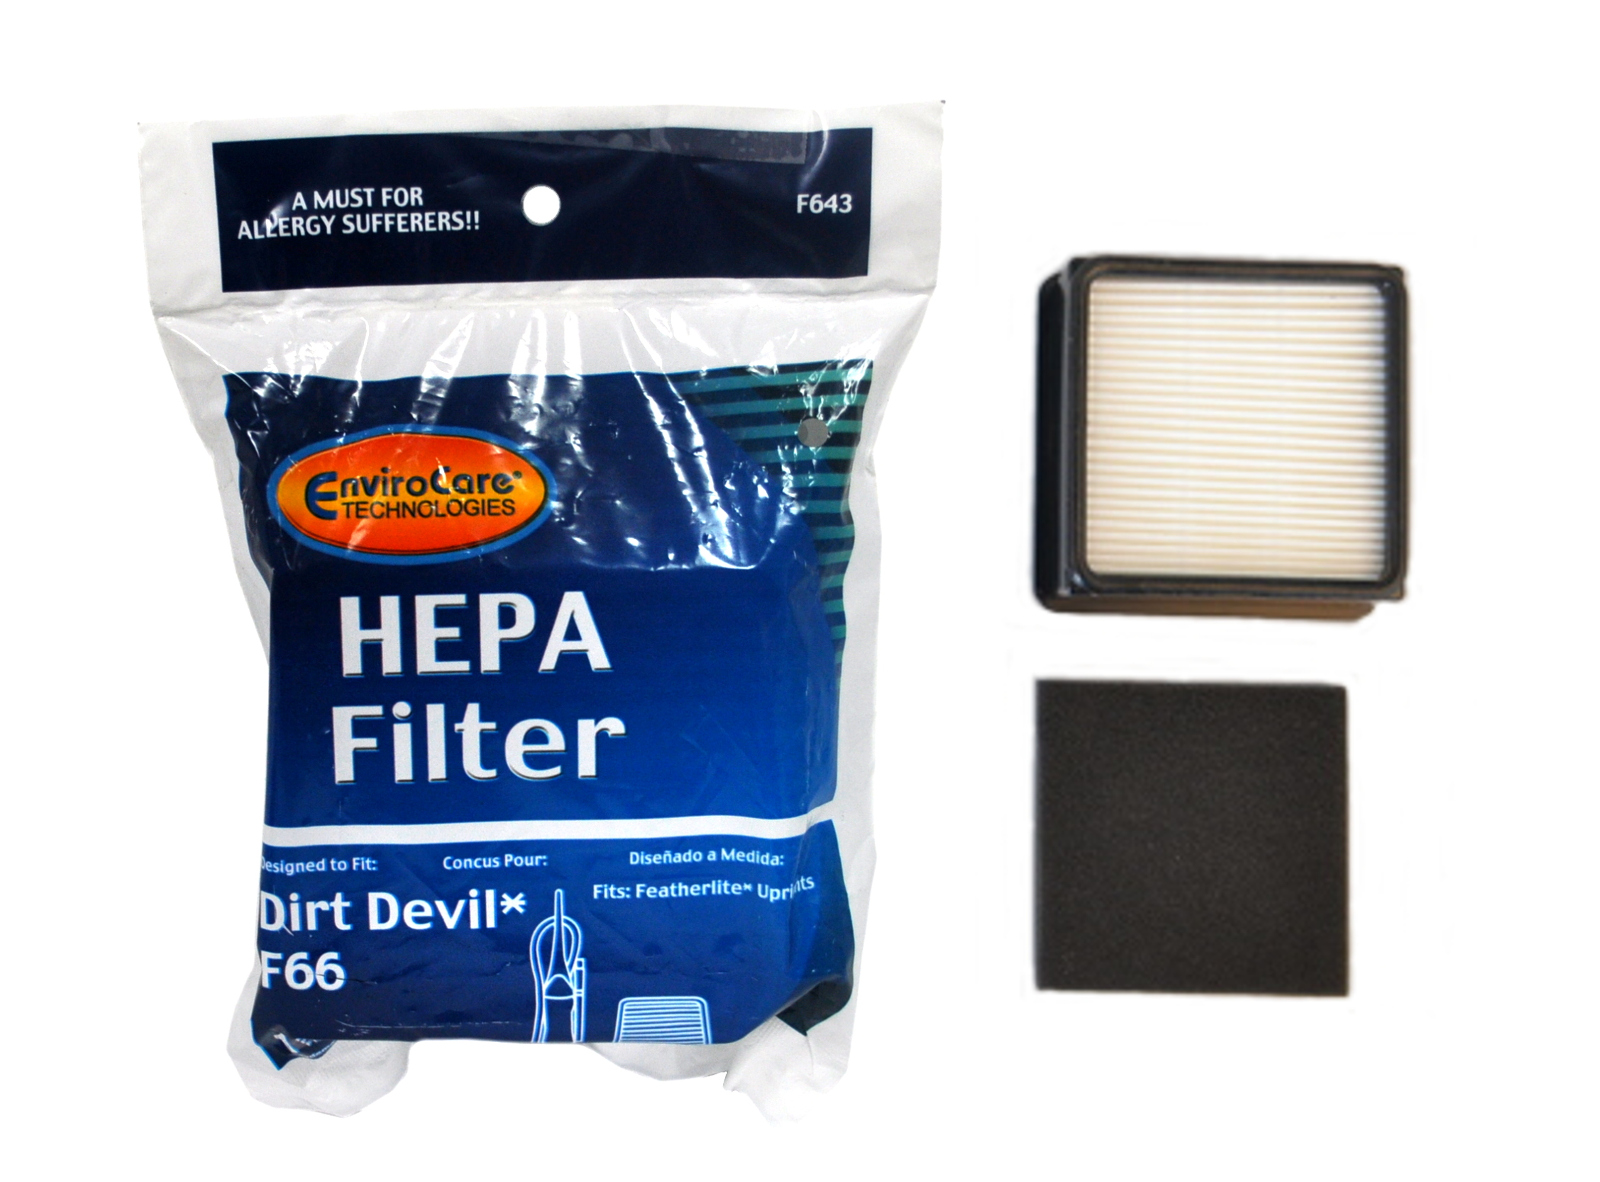 Envirocare HEPA Vacuum Filter Designed To Fit Dirt Devil F66 Bagless Upright Vacuum F643